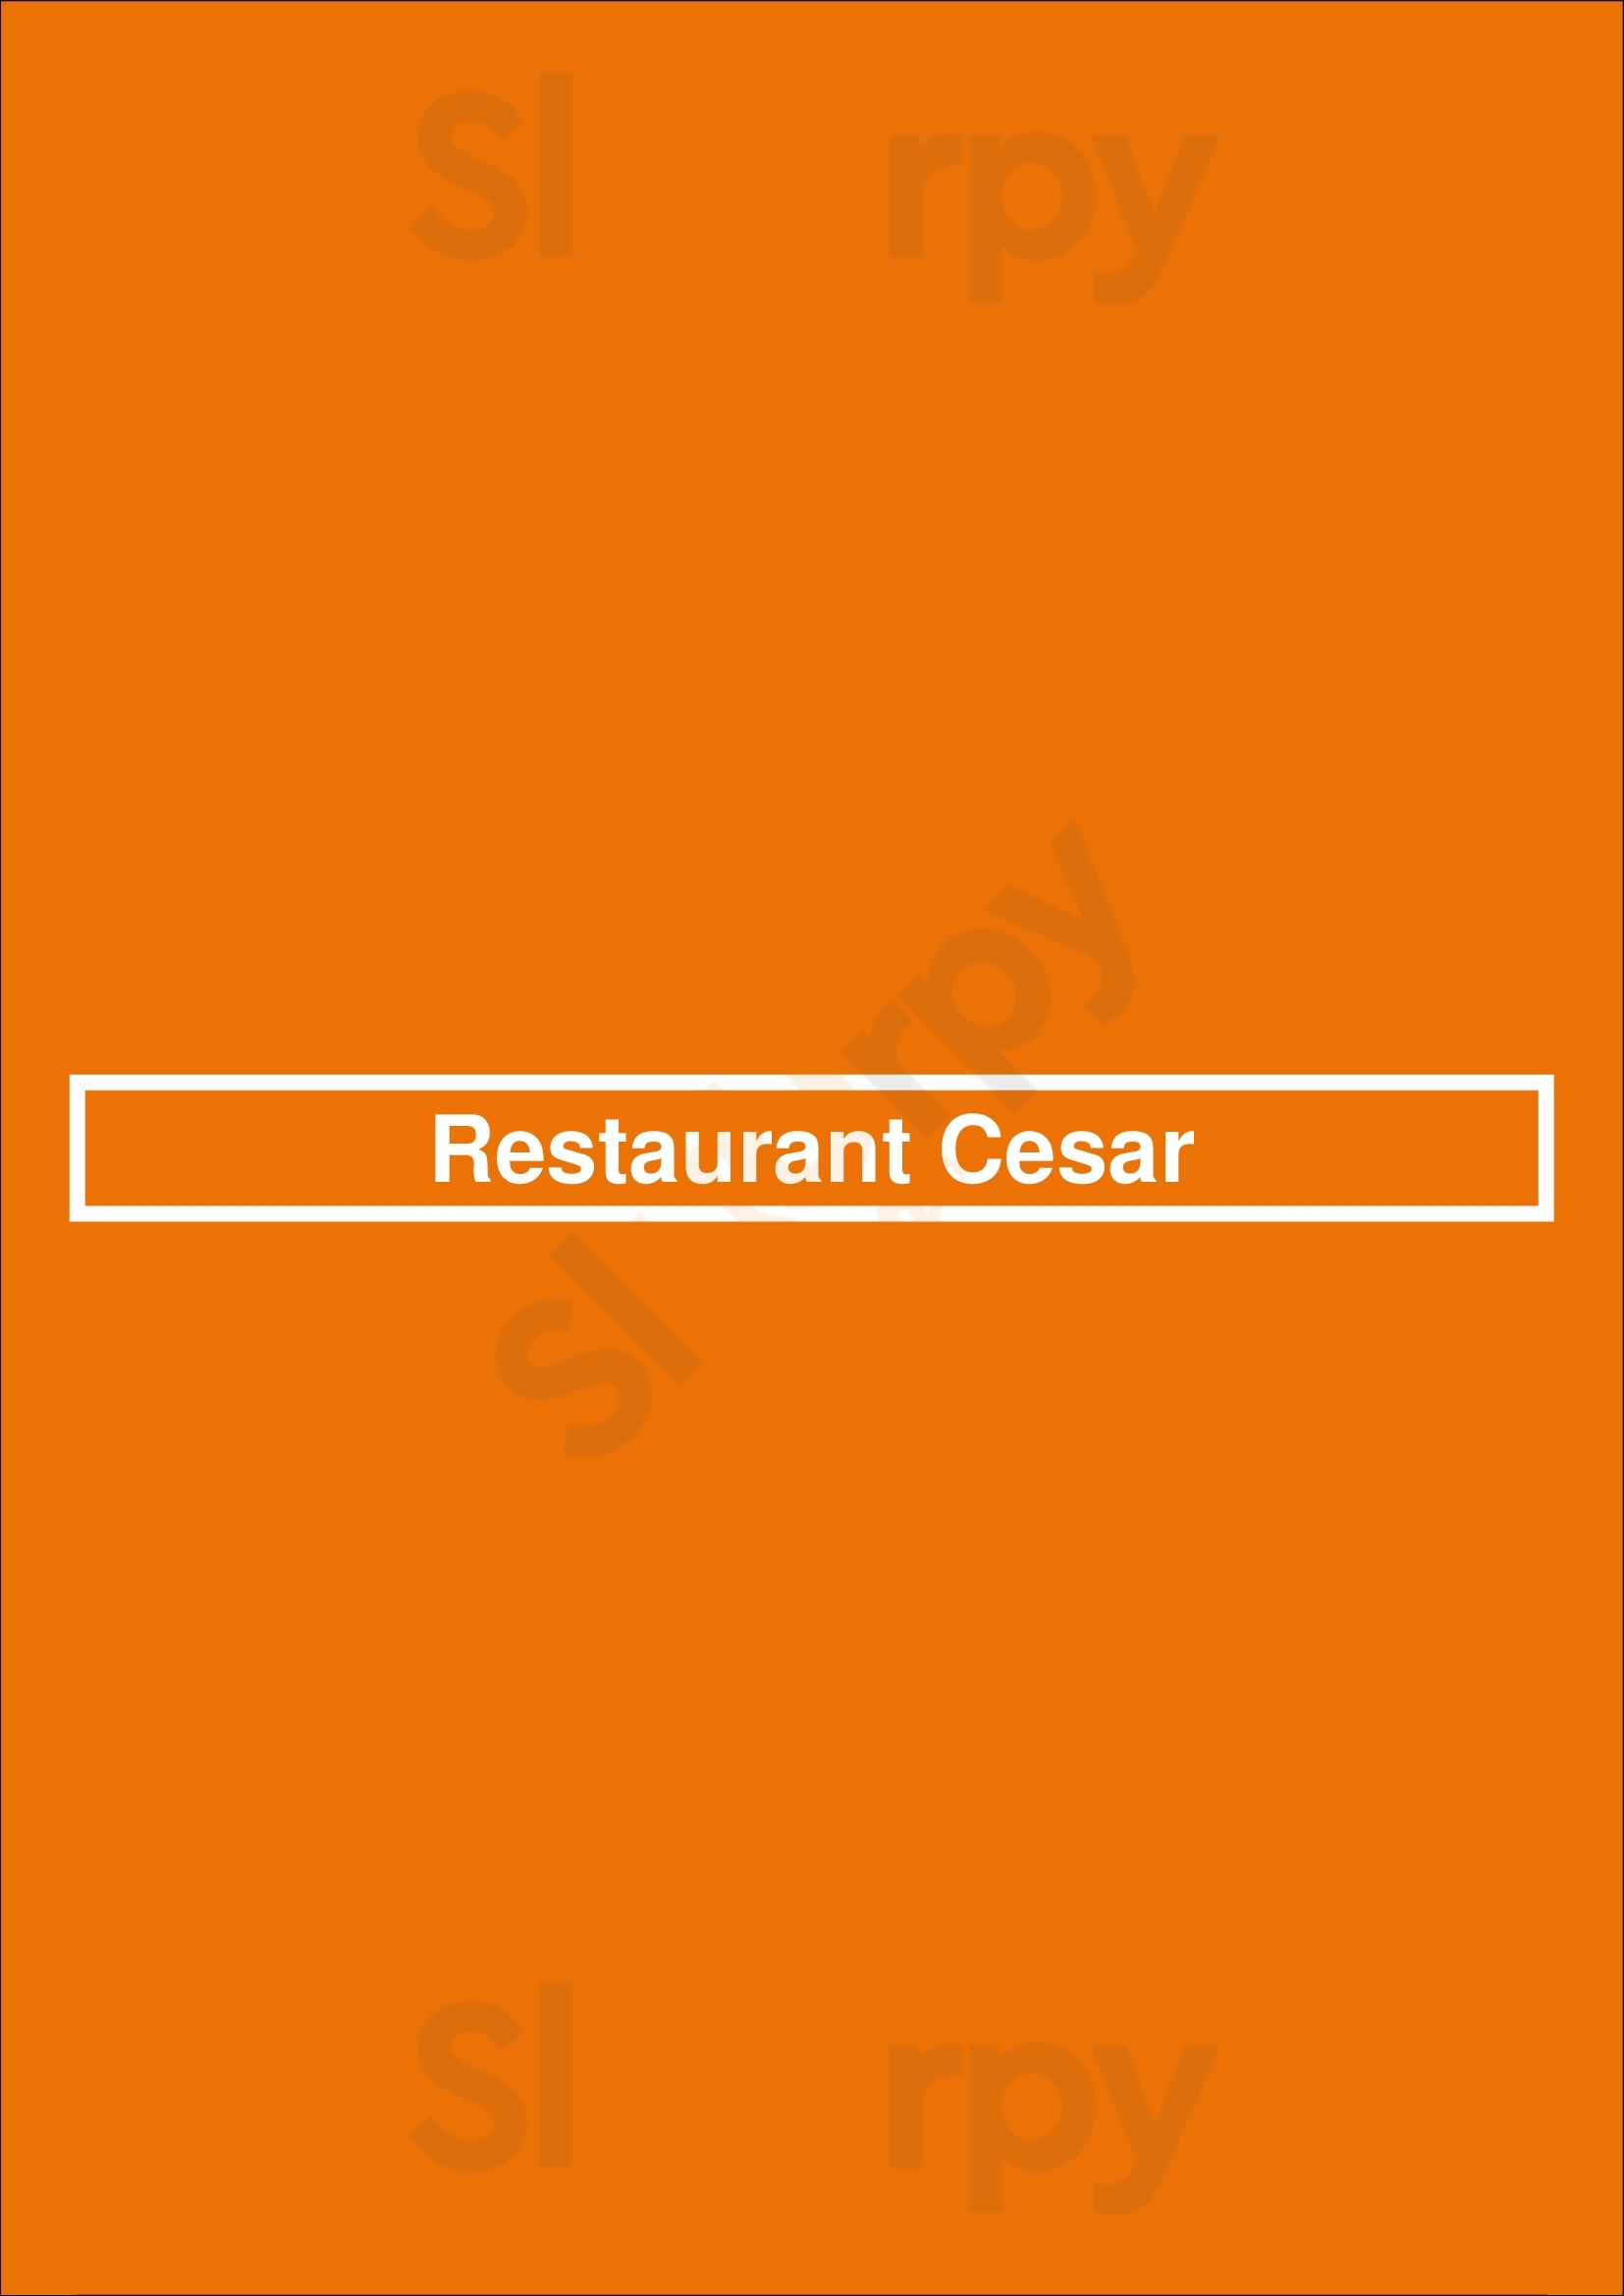 Restaurant Cesar Paris Menu - 1